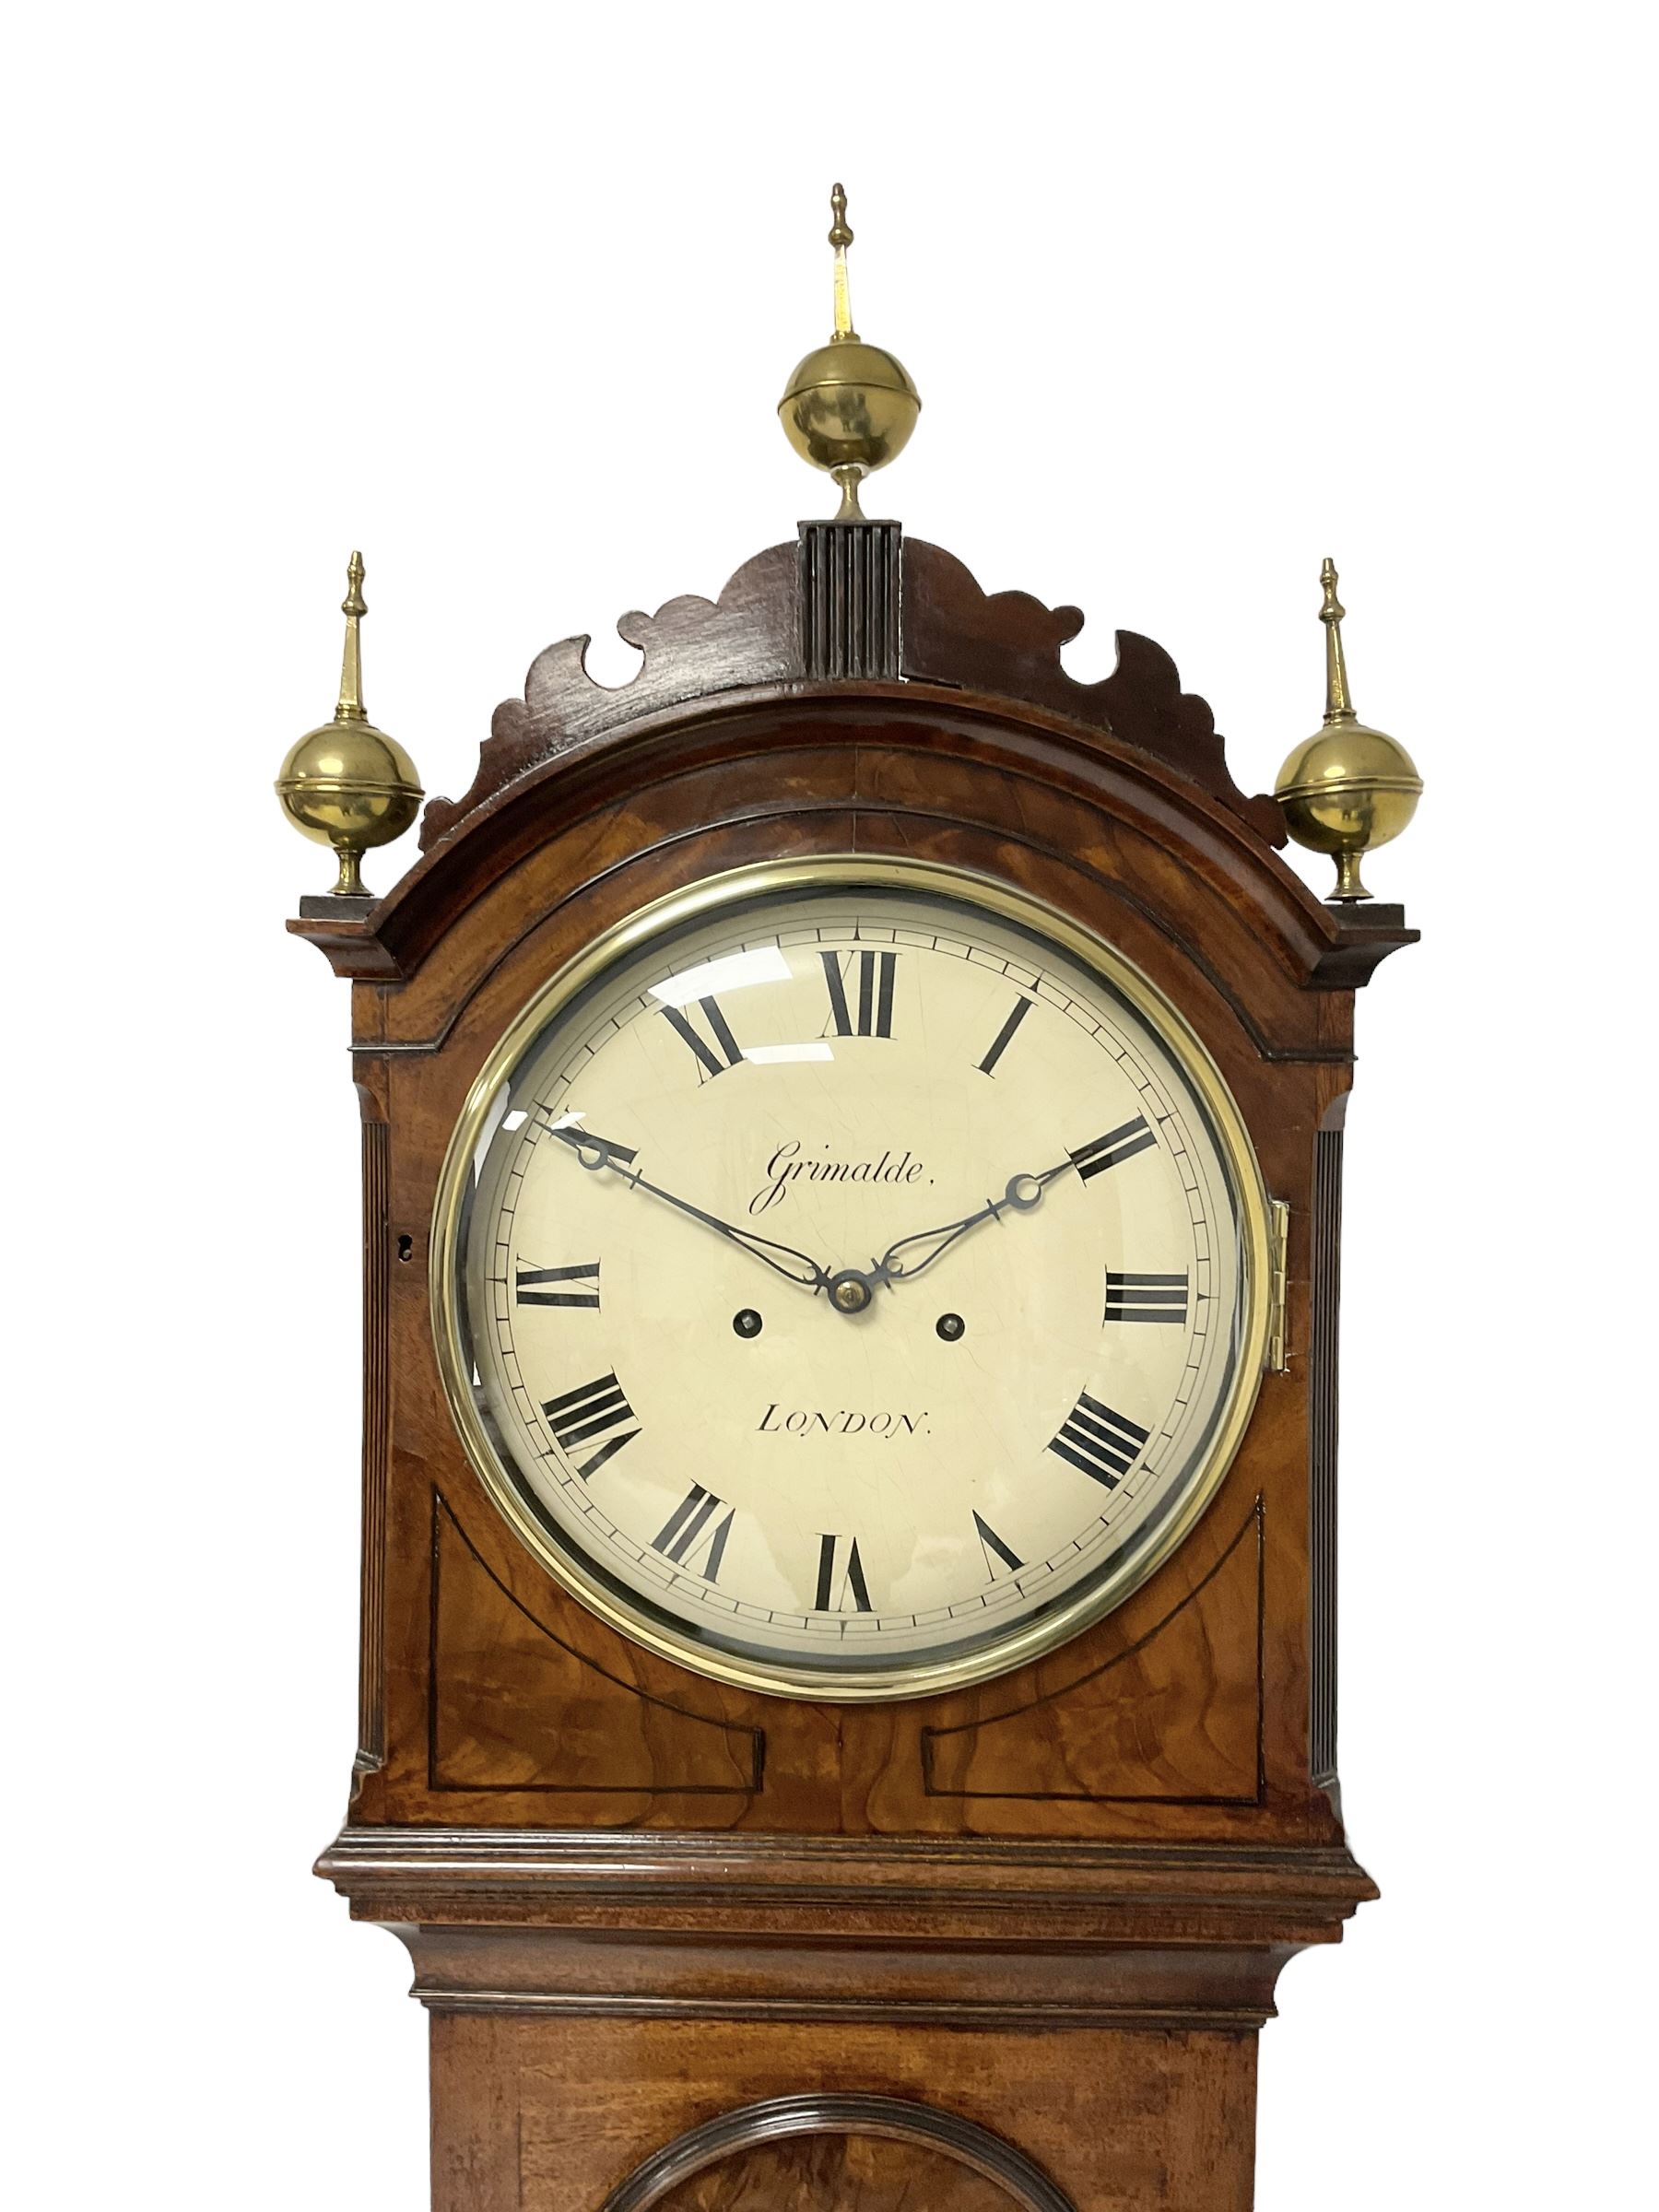 Grimalde of London - Mahogany 8-day longcase clock c1805 - Image 3 of 14